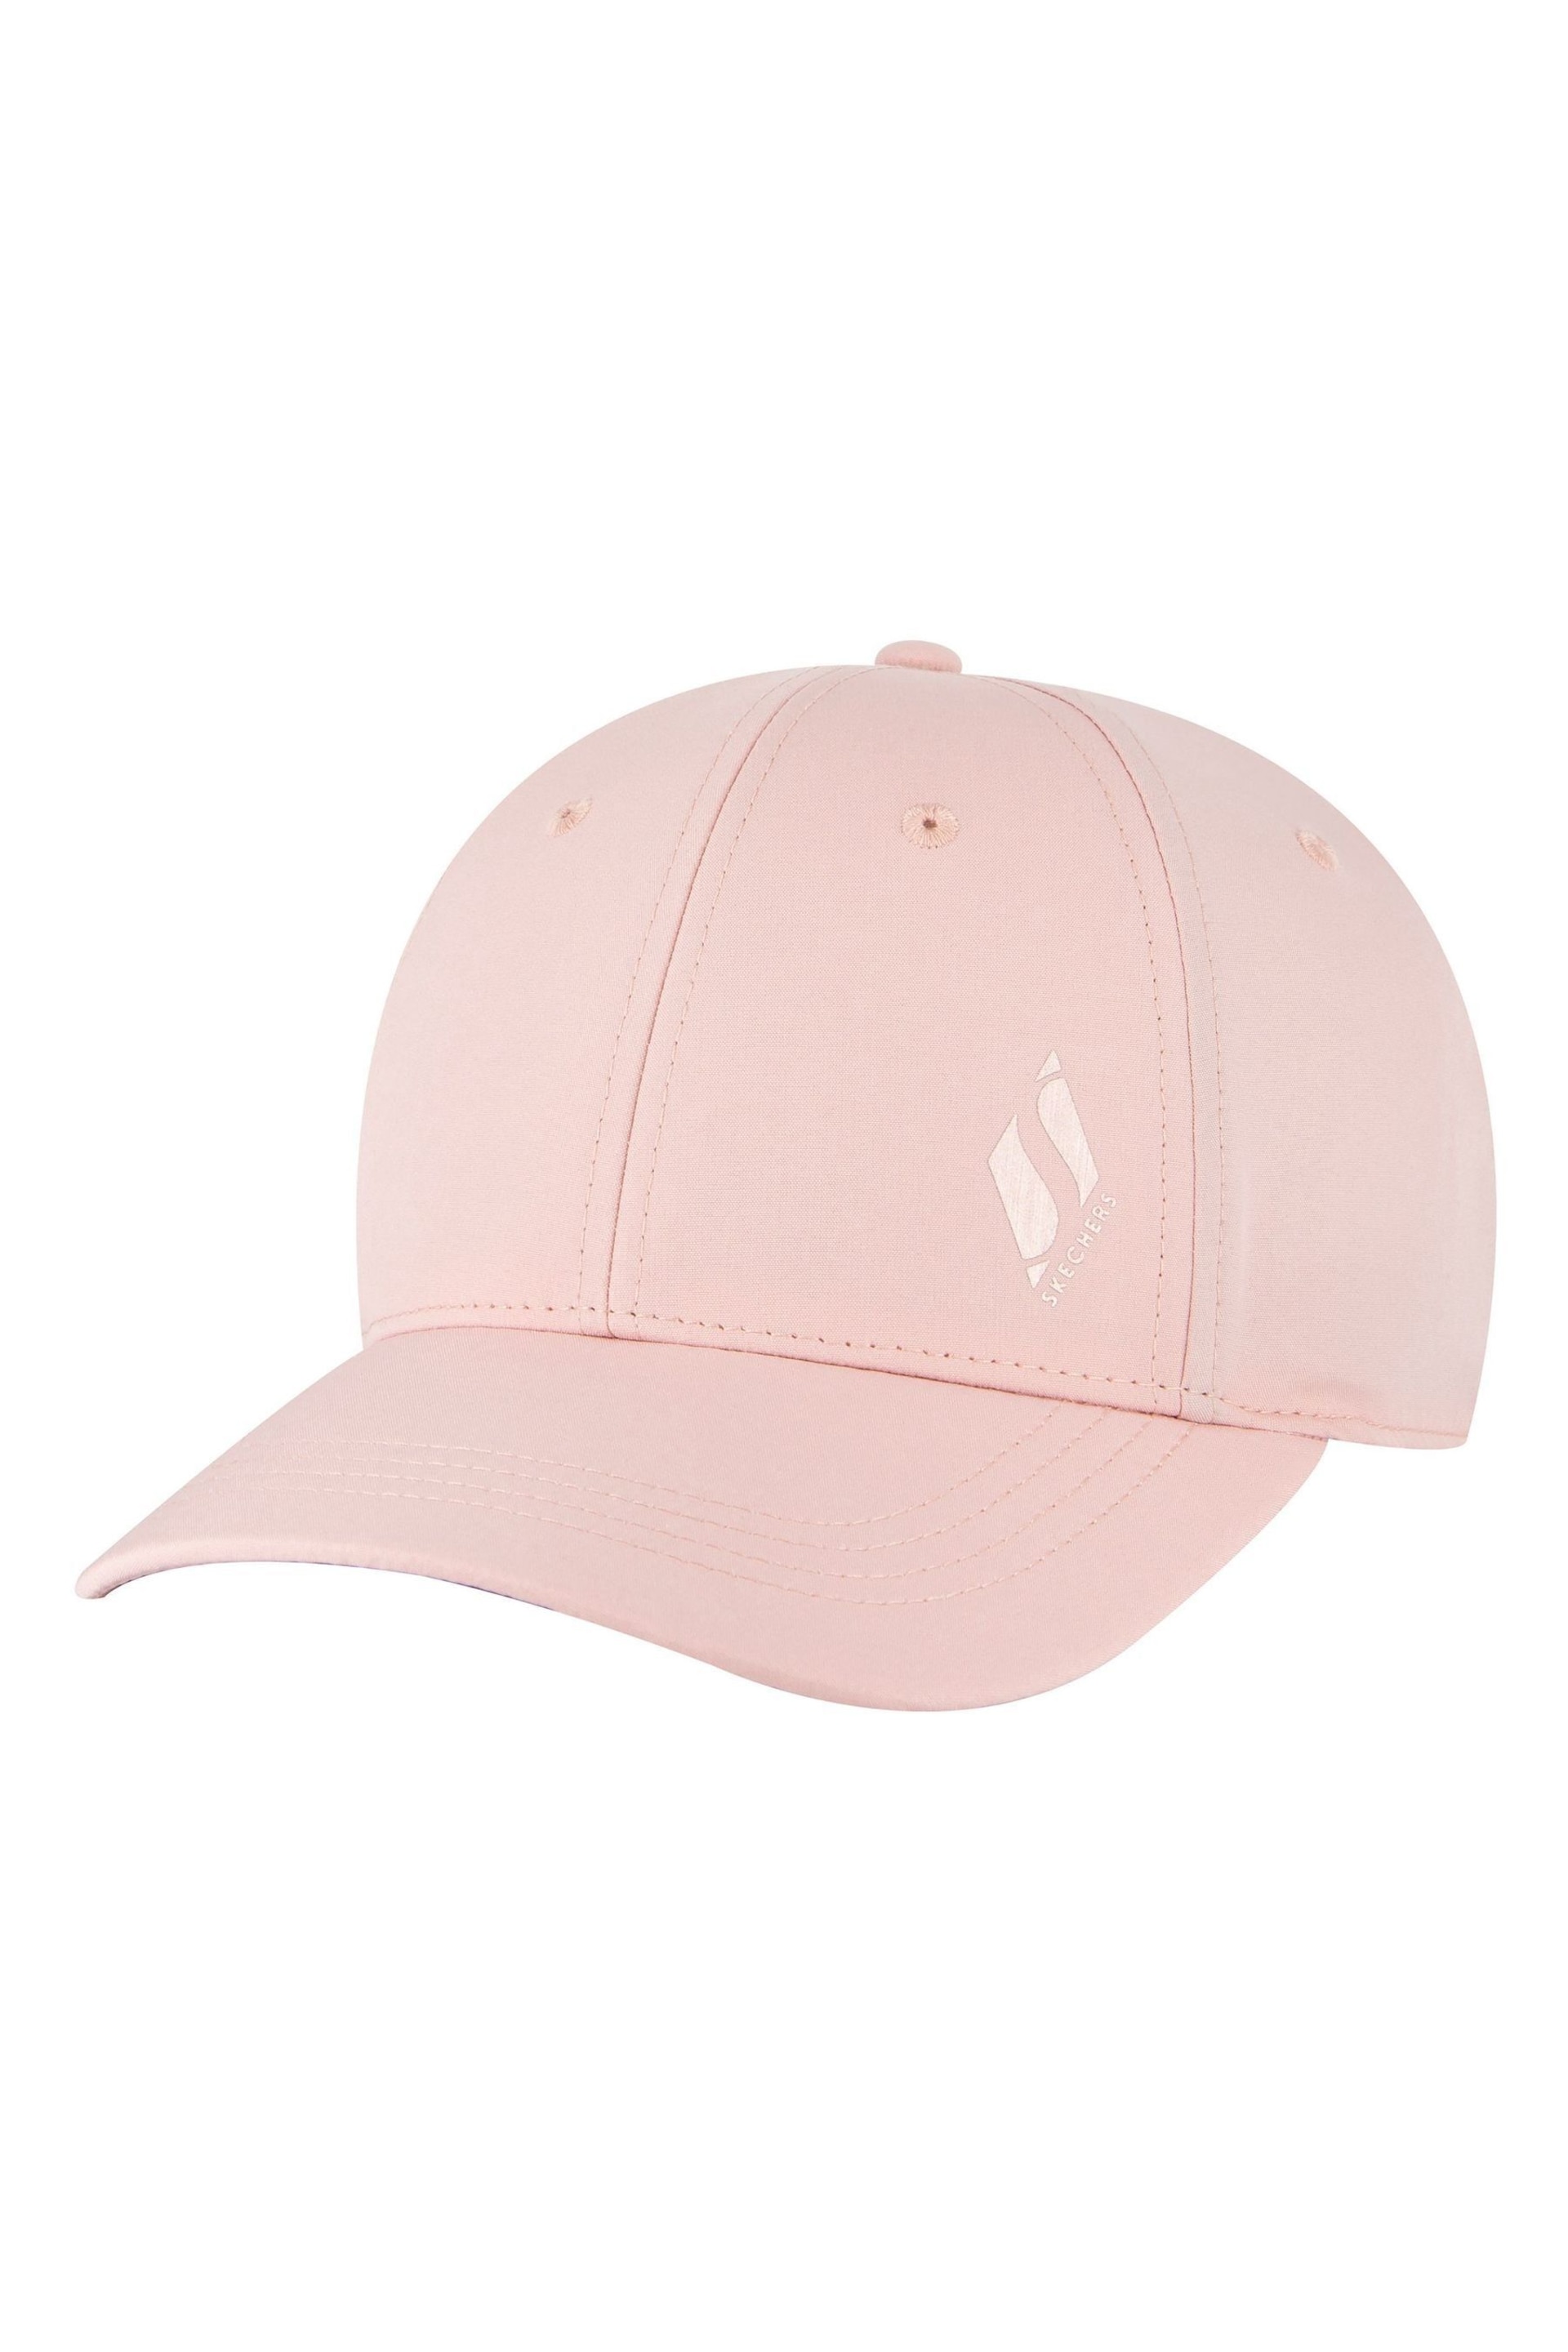 Skechers Pink Skech-Shine Rose Gold Diamond Hat - Image 1 of 5